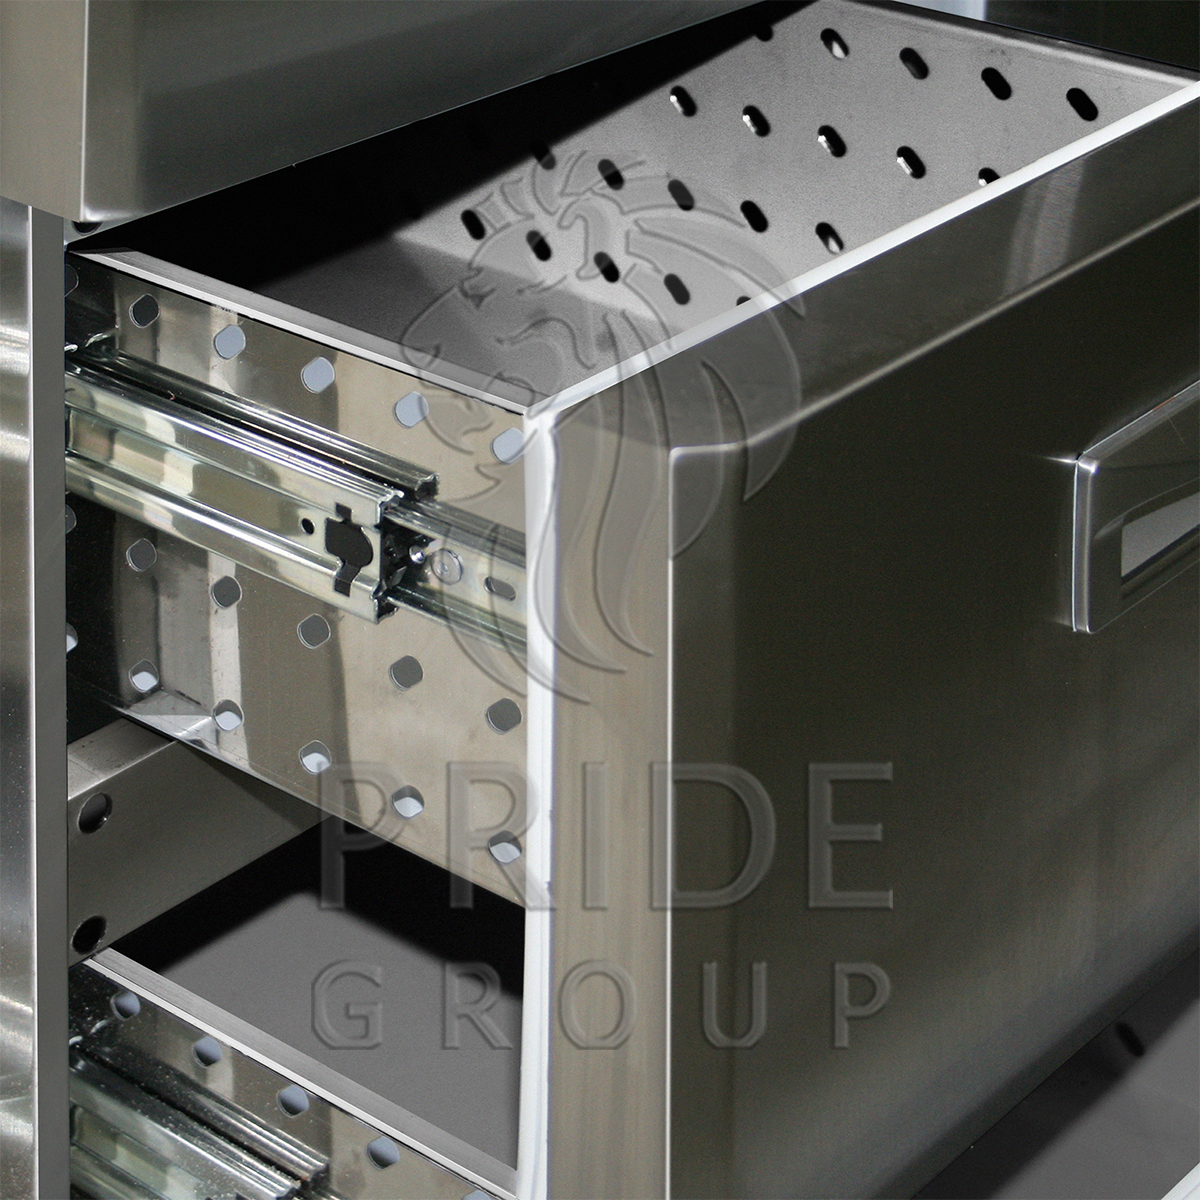 картинка Стол холодильный Finist УХС-600-3/3 универсальный 2300х600х850 мм